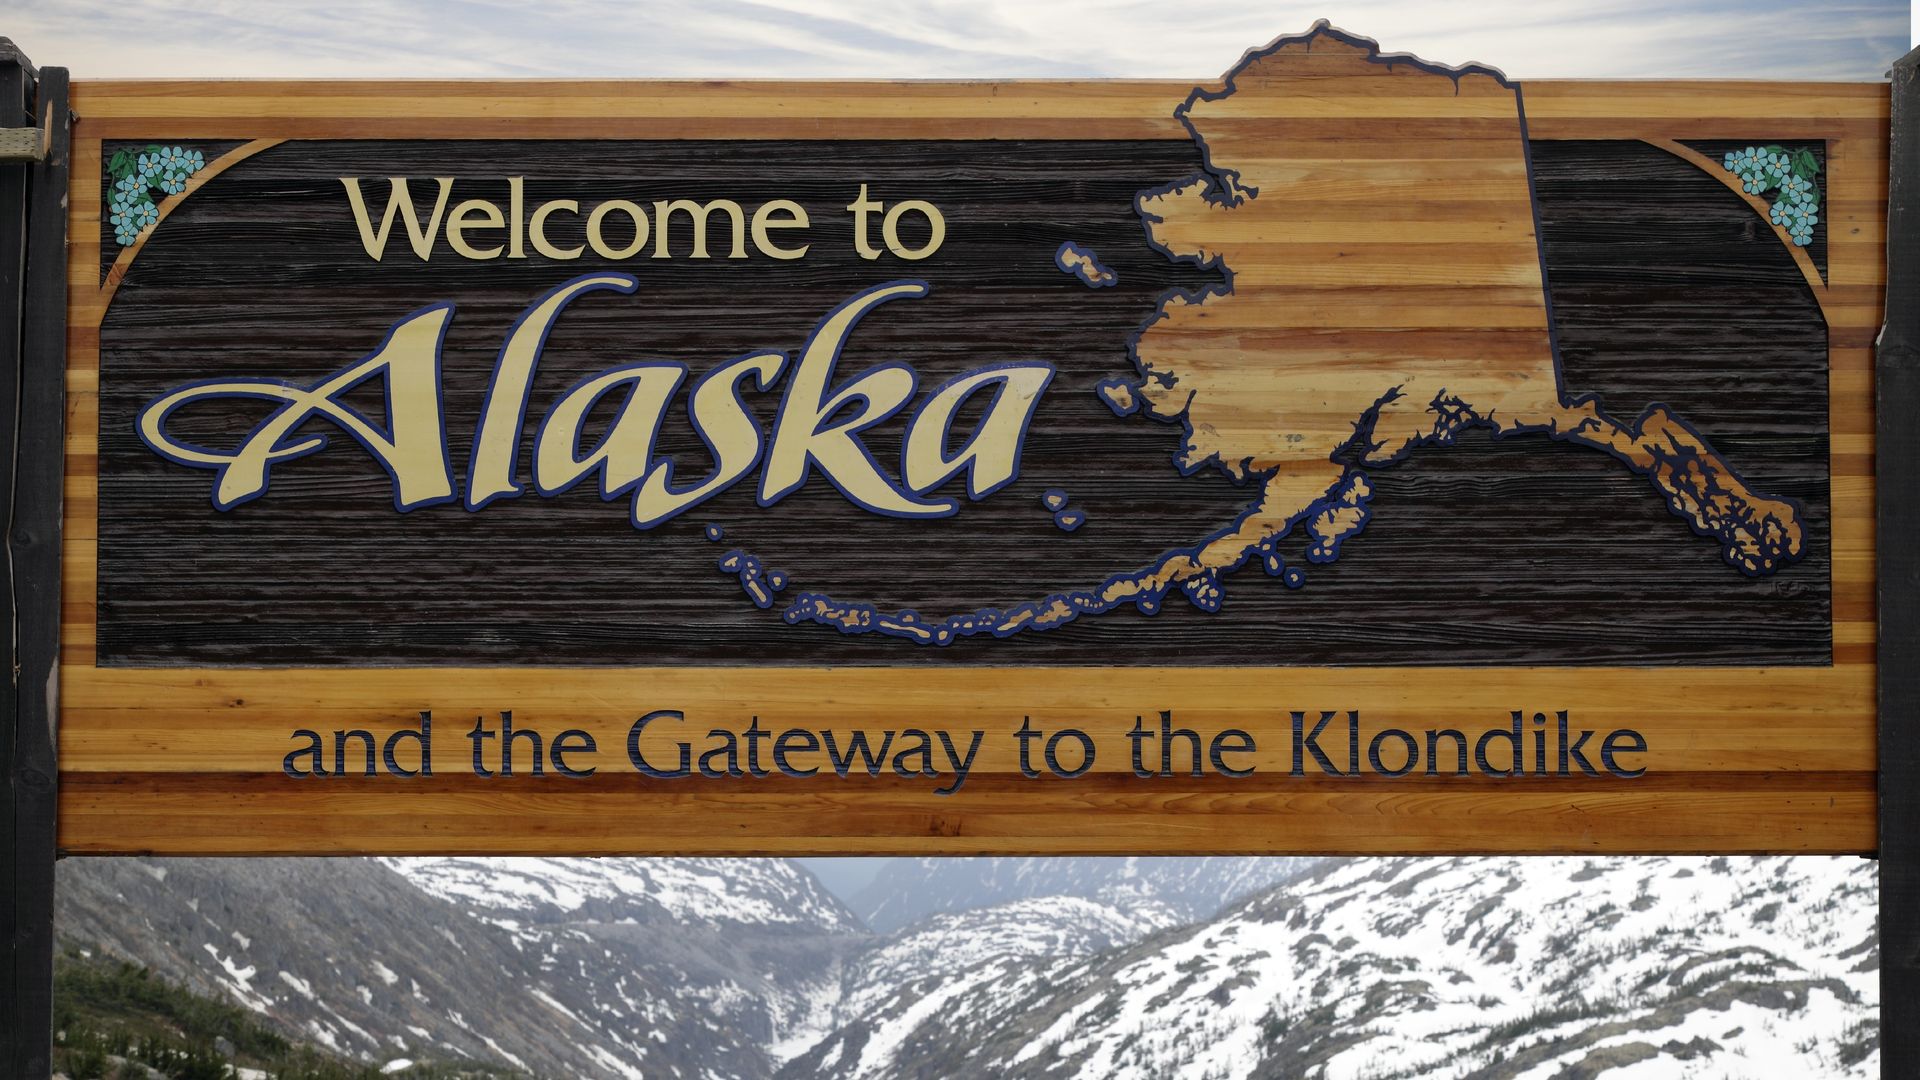 A welcome to alaska sign